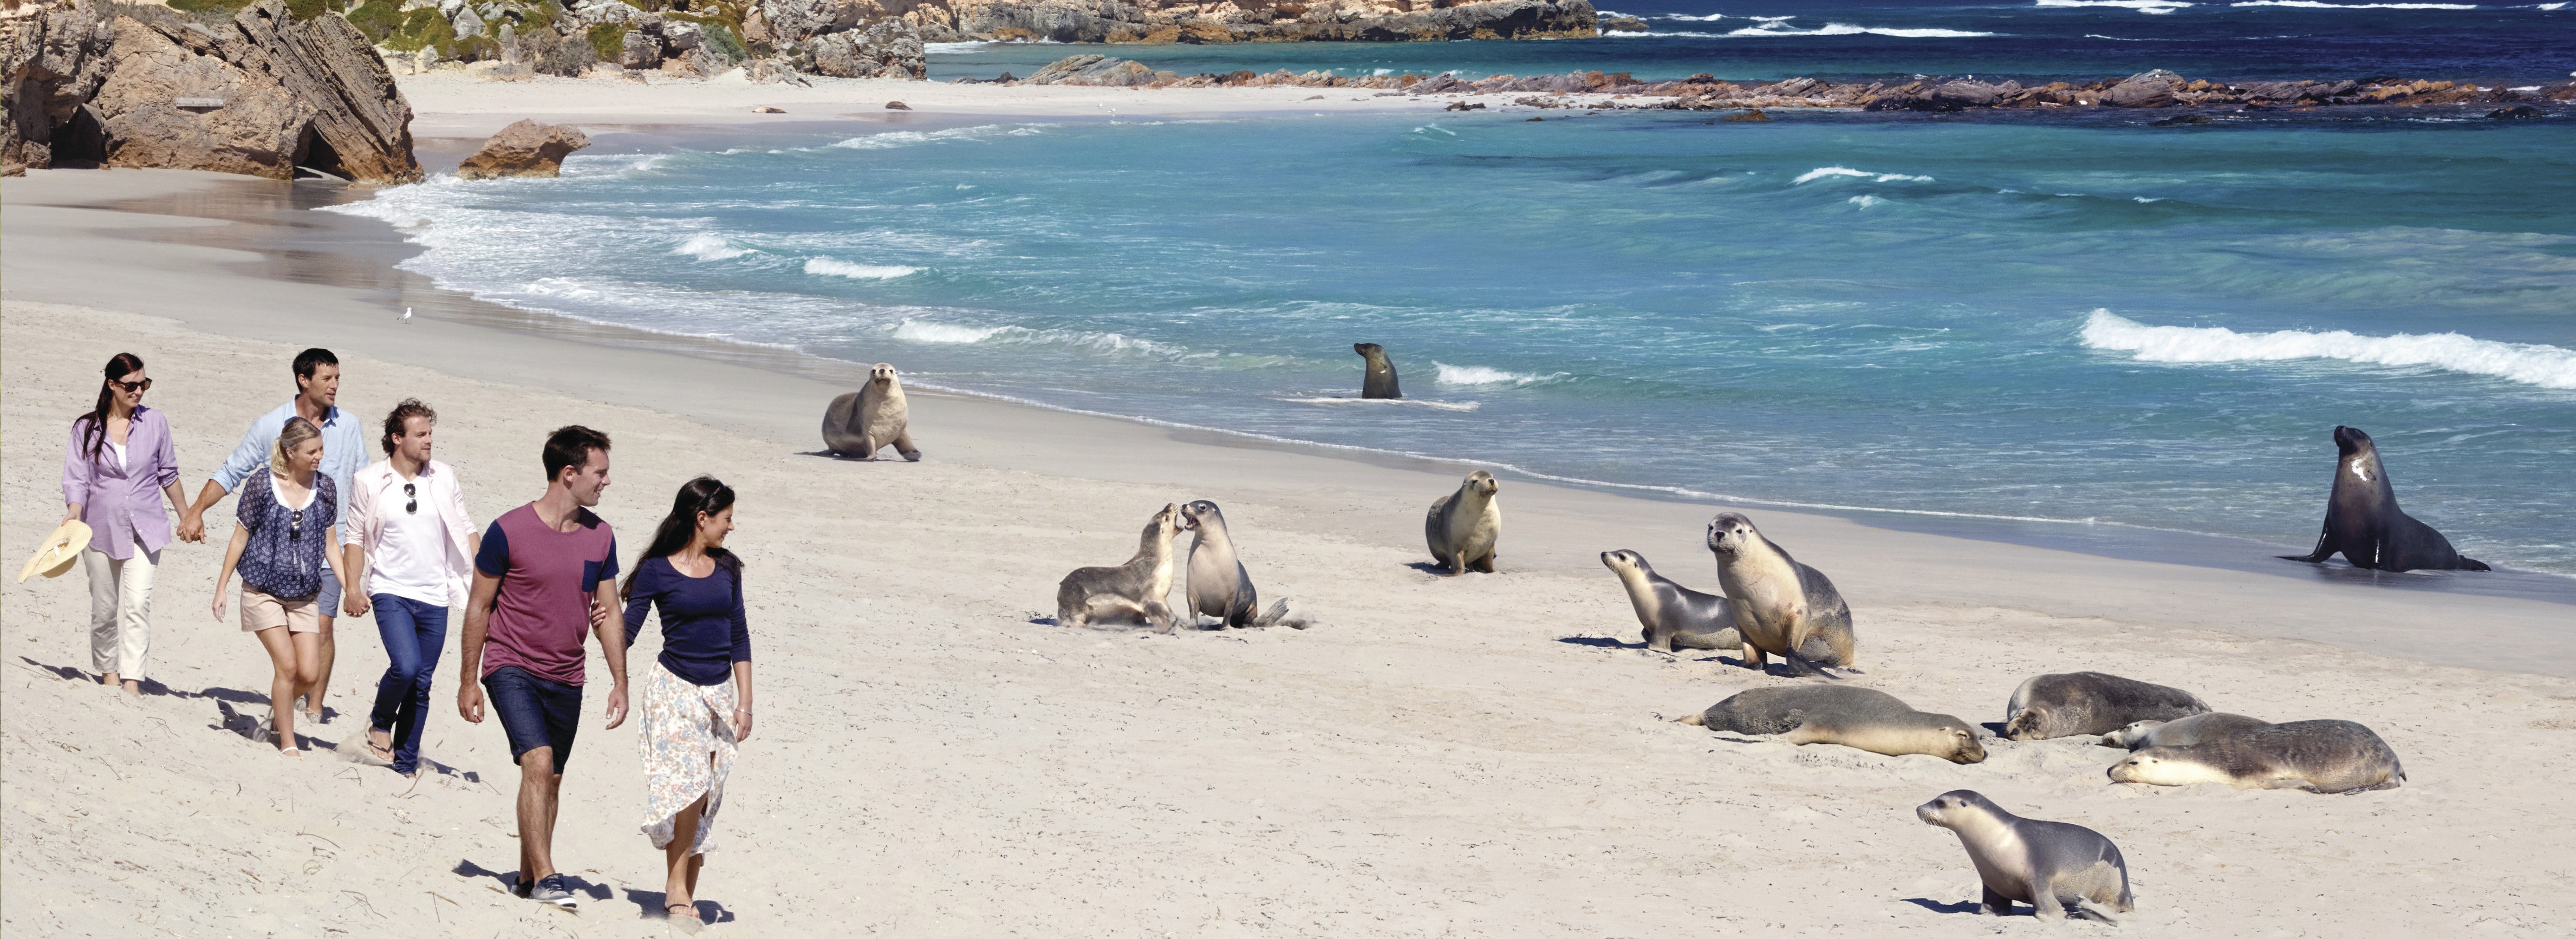 Seal Bay Conservation Park, Kangaroo Island, SA